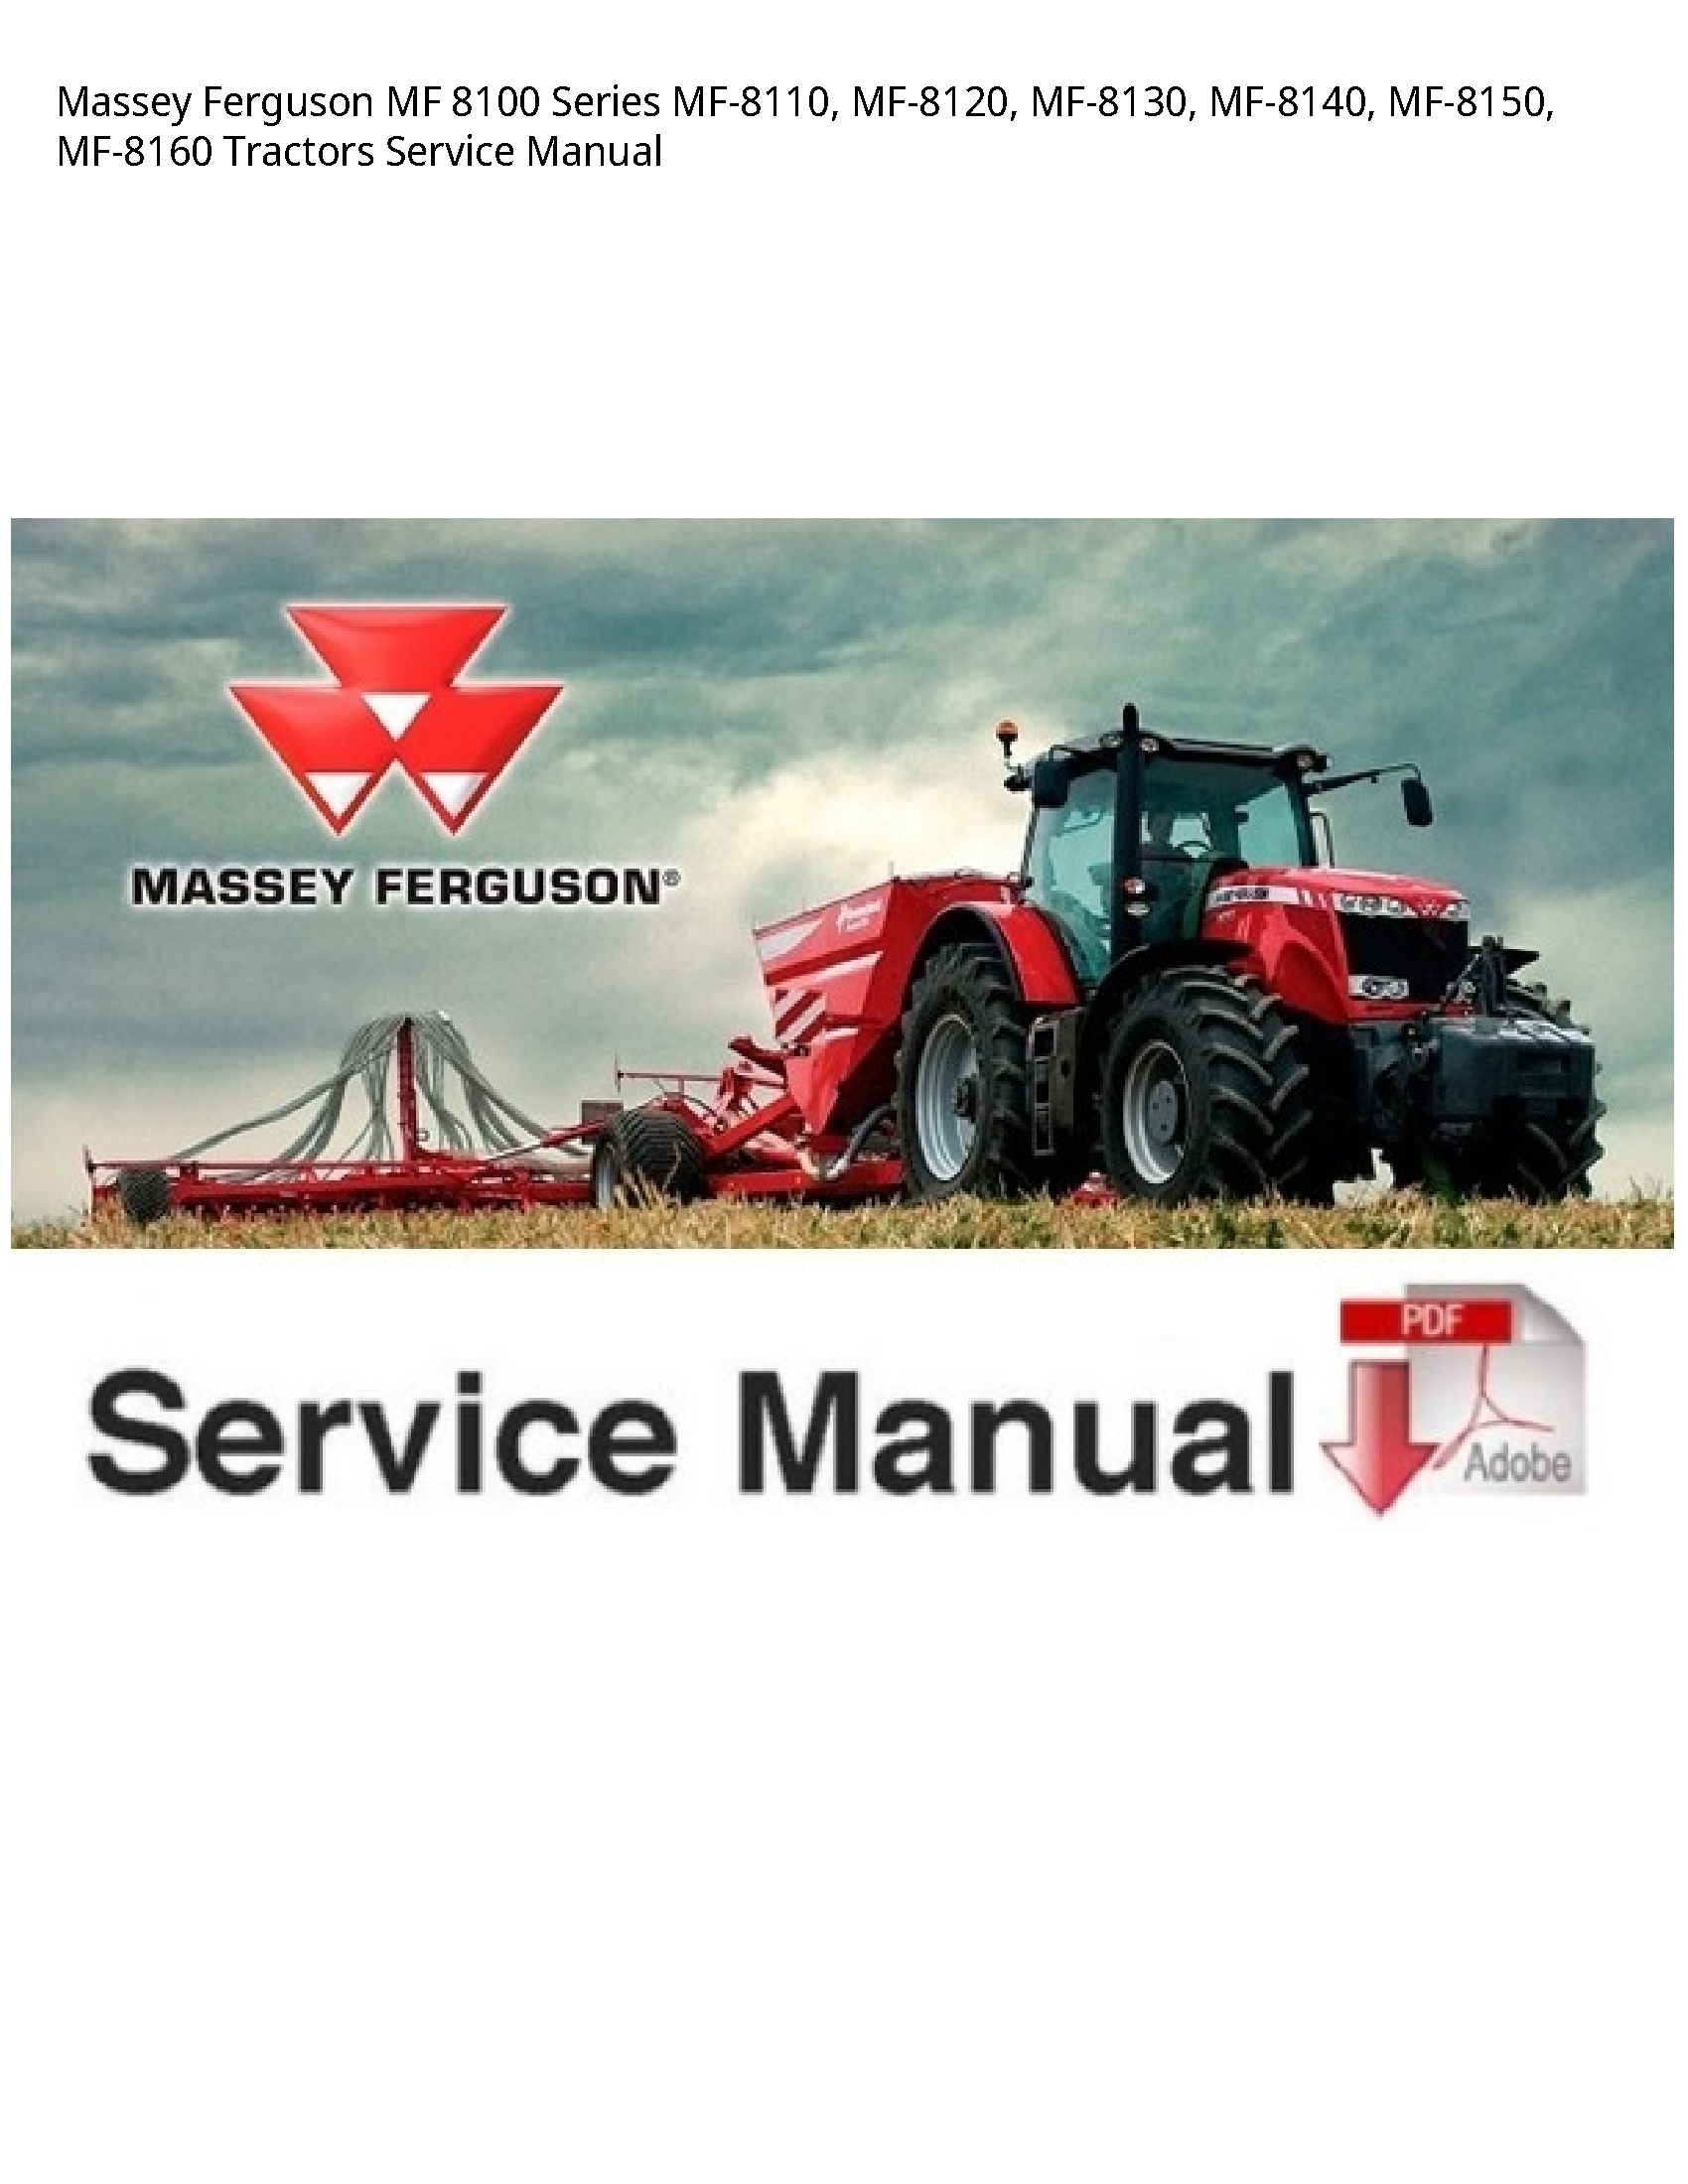 Massey Ferguson 8100 MF Series Tractors Service manual